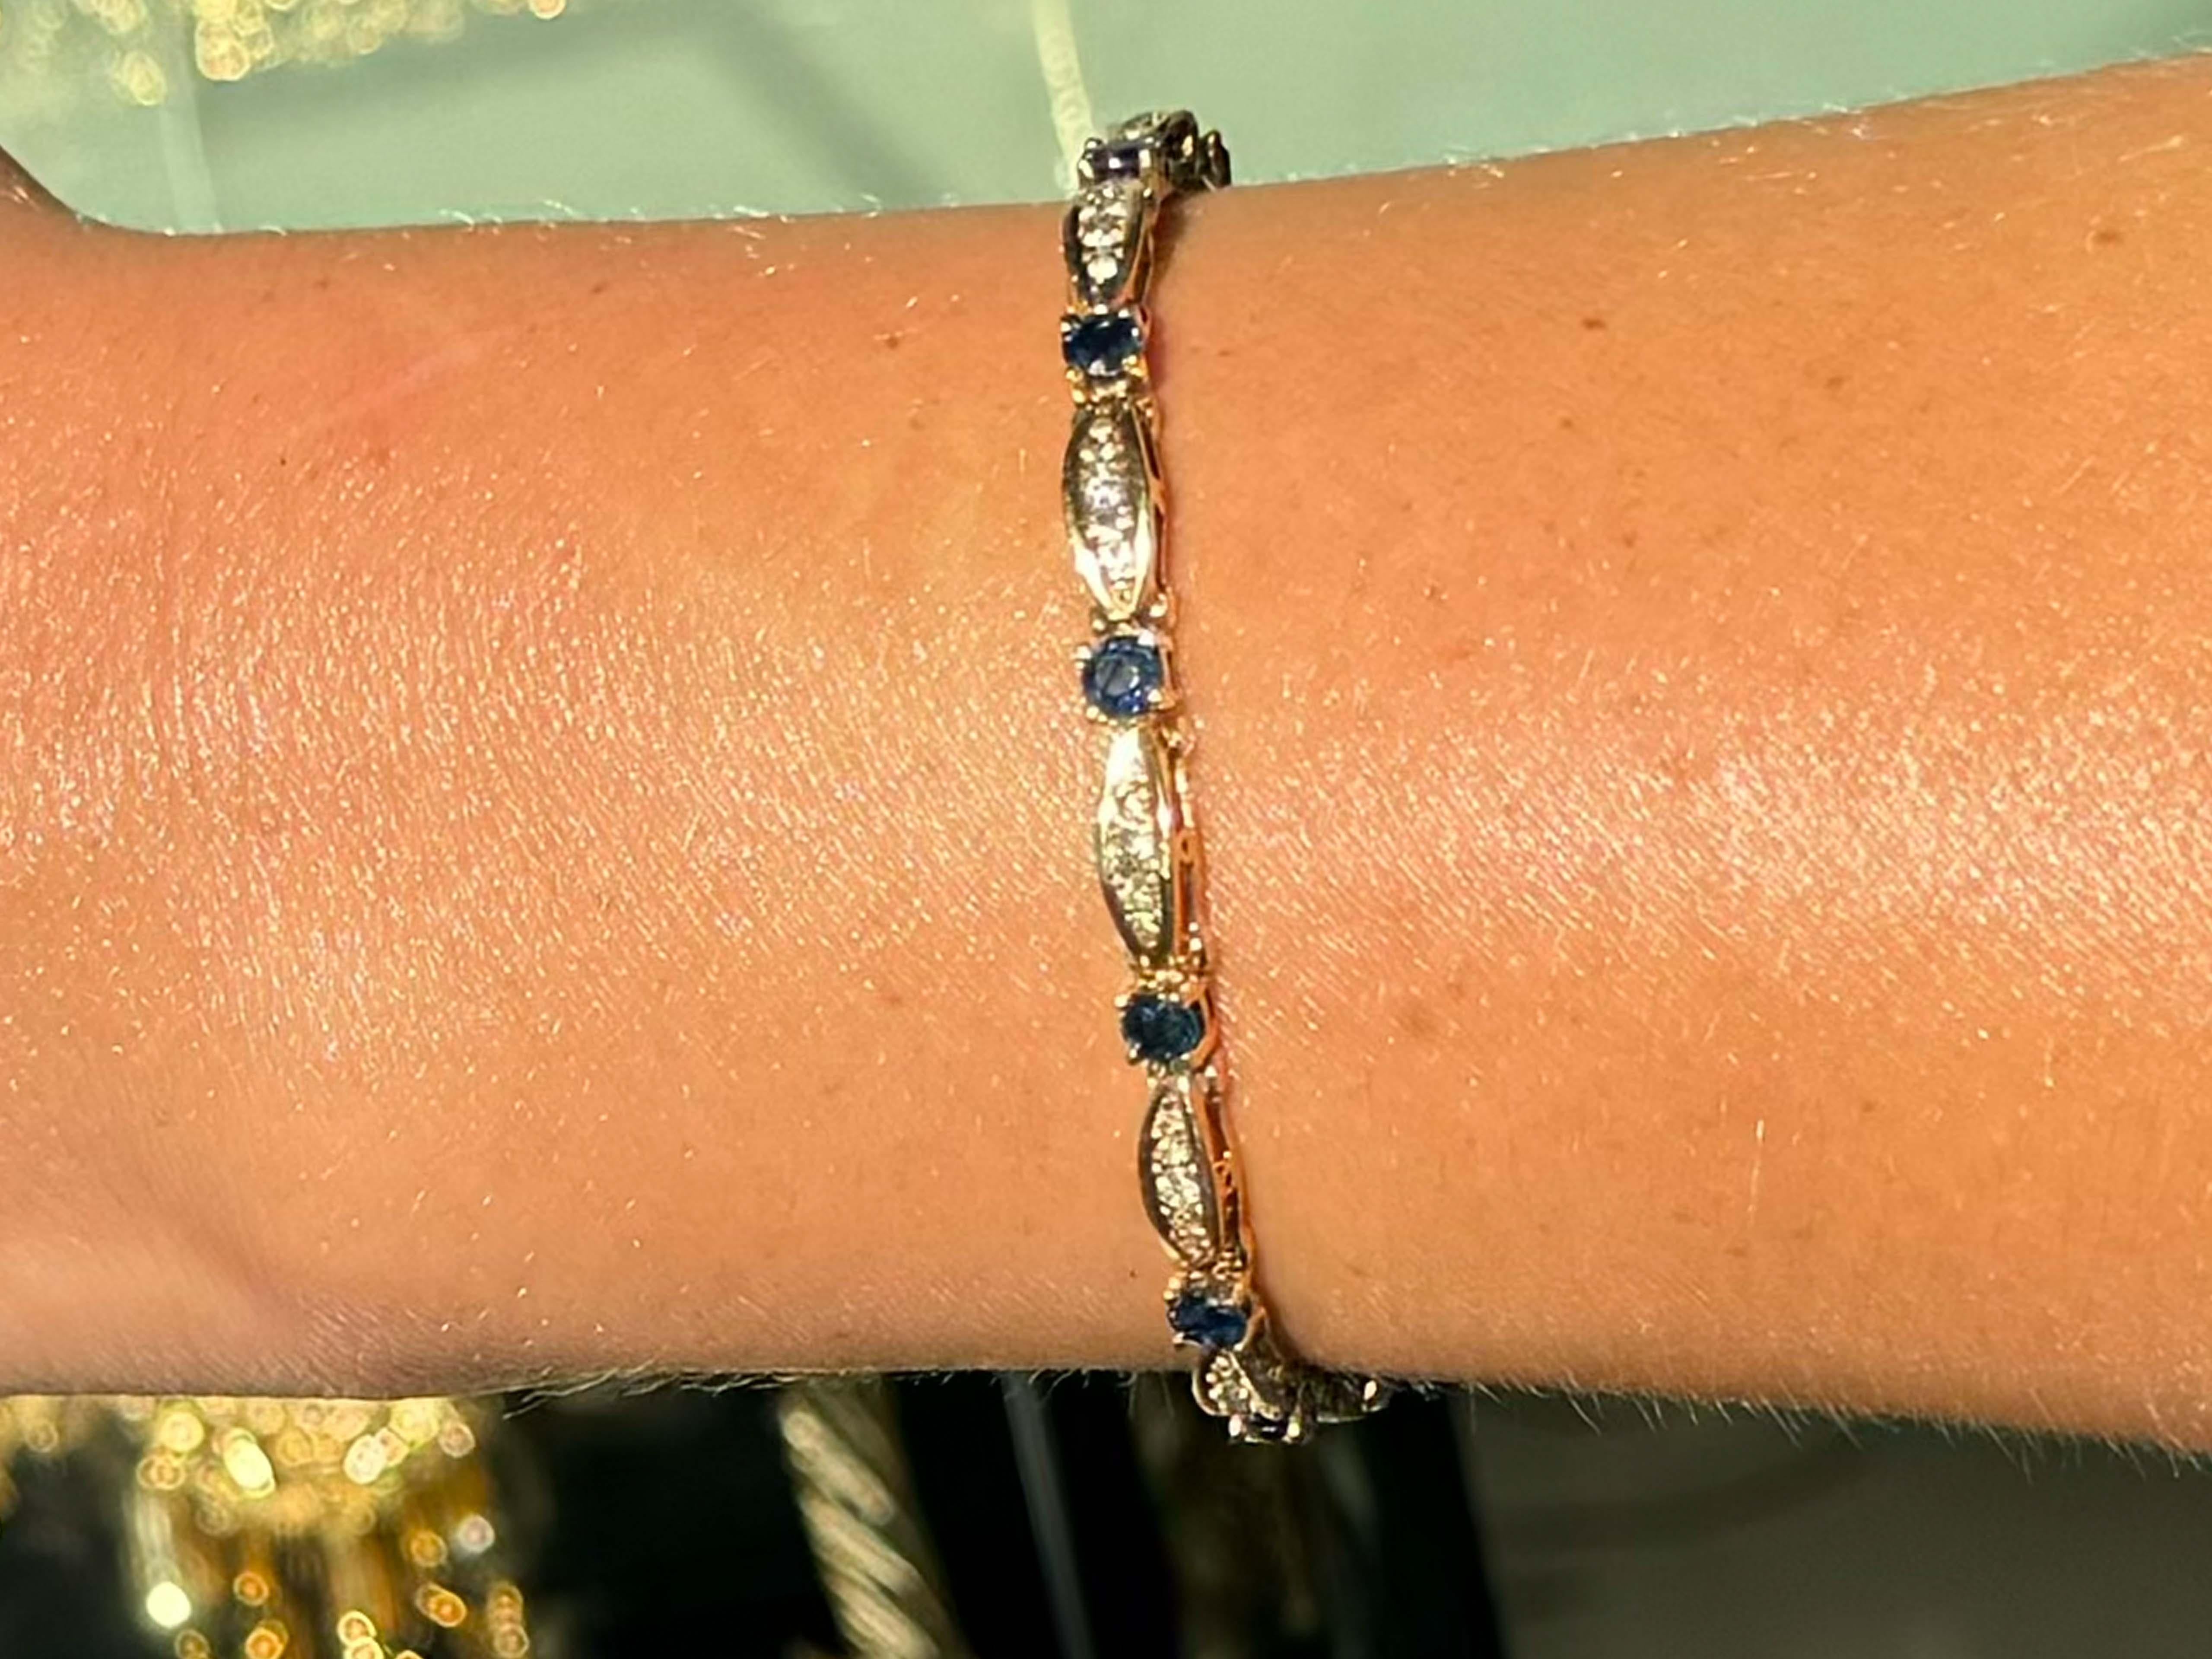 Bracelet Specifications:

Metal: 14k Yellow Gold

Sapphire Count: 12 round blue sapphires

Sapphire Carat Weight: ~2.50 carats

Diamond Carat Weight: ~ 0.55 carats

Diamond Count: 55 brilliant 

Diamond Color: G-H

Diamond Clarity: VS2-SI2

Bracelet